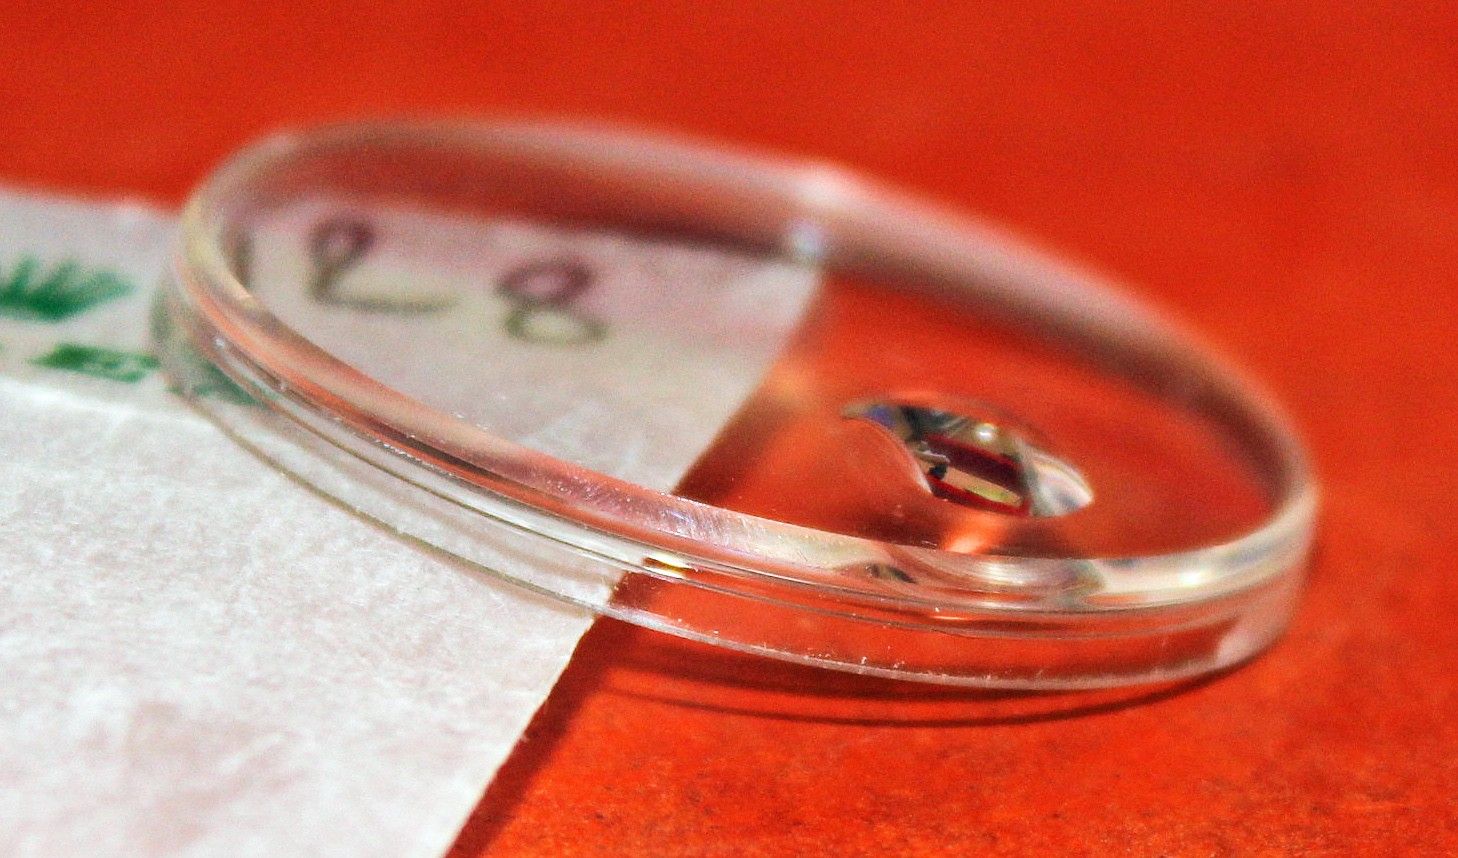 ▄▀▄ Rare Rolex Tudor Cyclope plastic crystal plexi 128 Monte Carlo Tudor Chronograph 7149, 7159, 7169 watches ▄▀▄